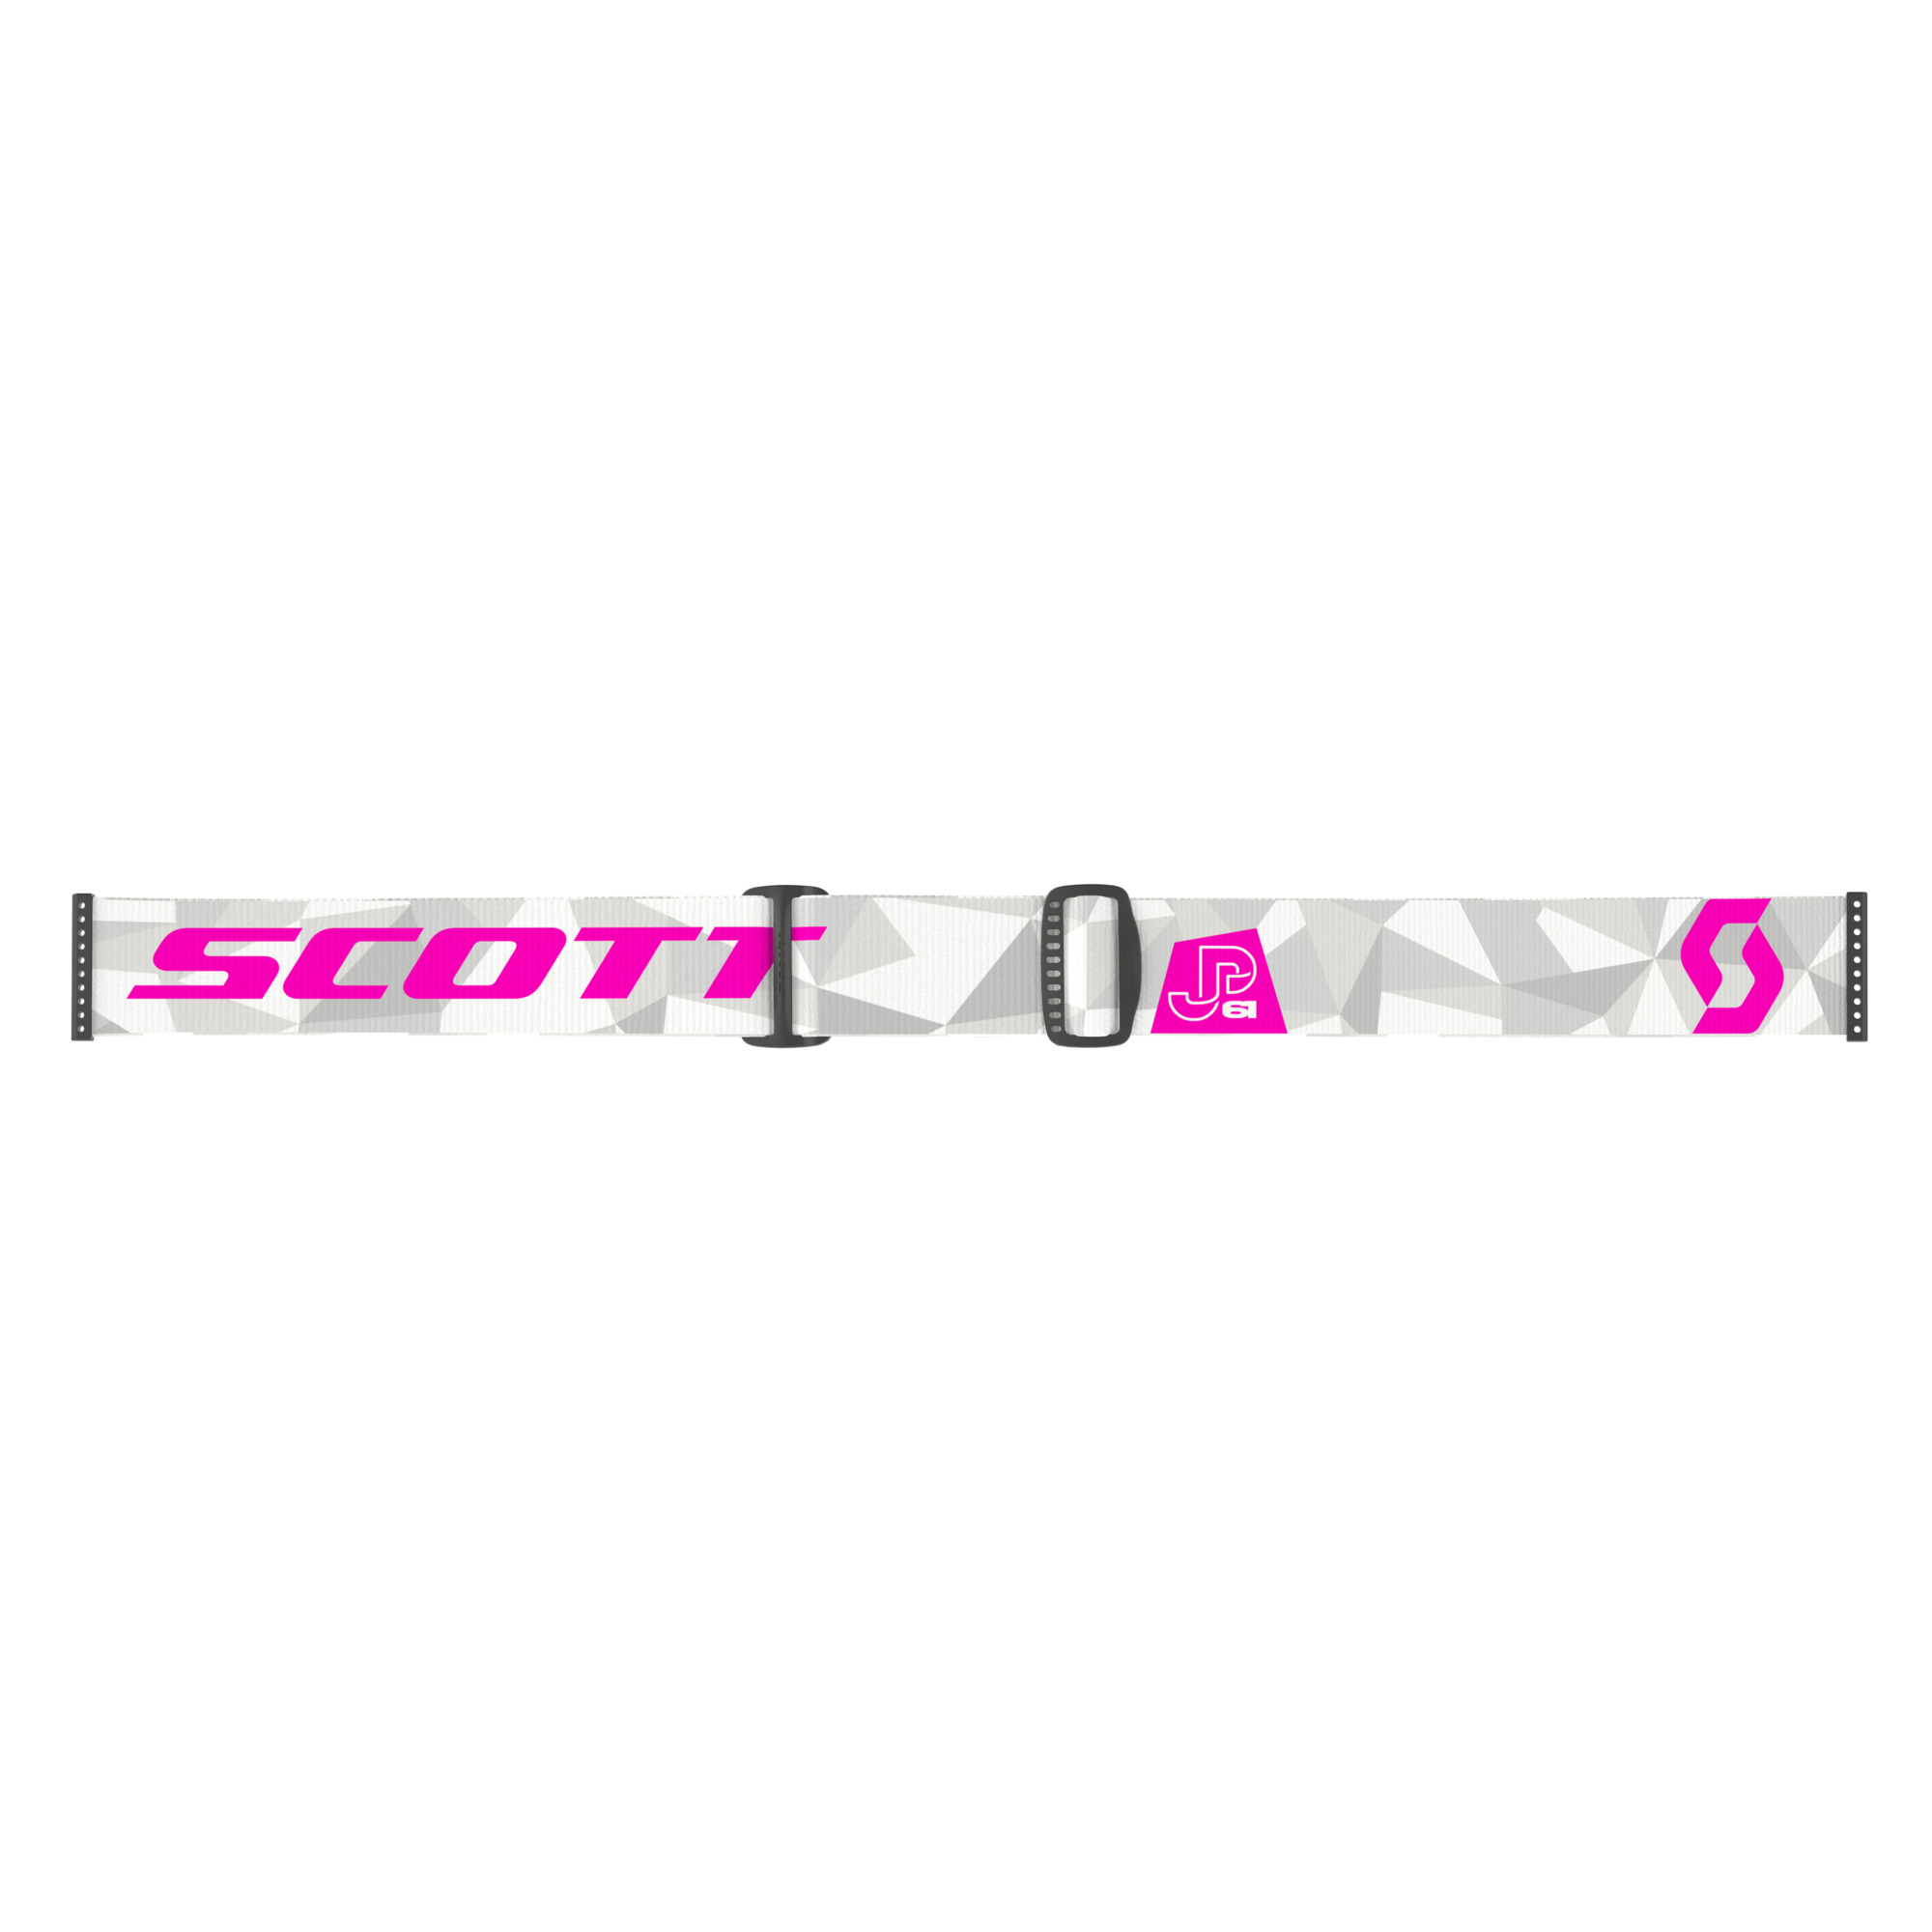 Scott Box S00 - Sport and Lifestyle